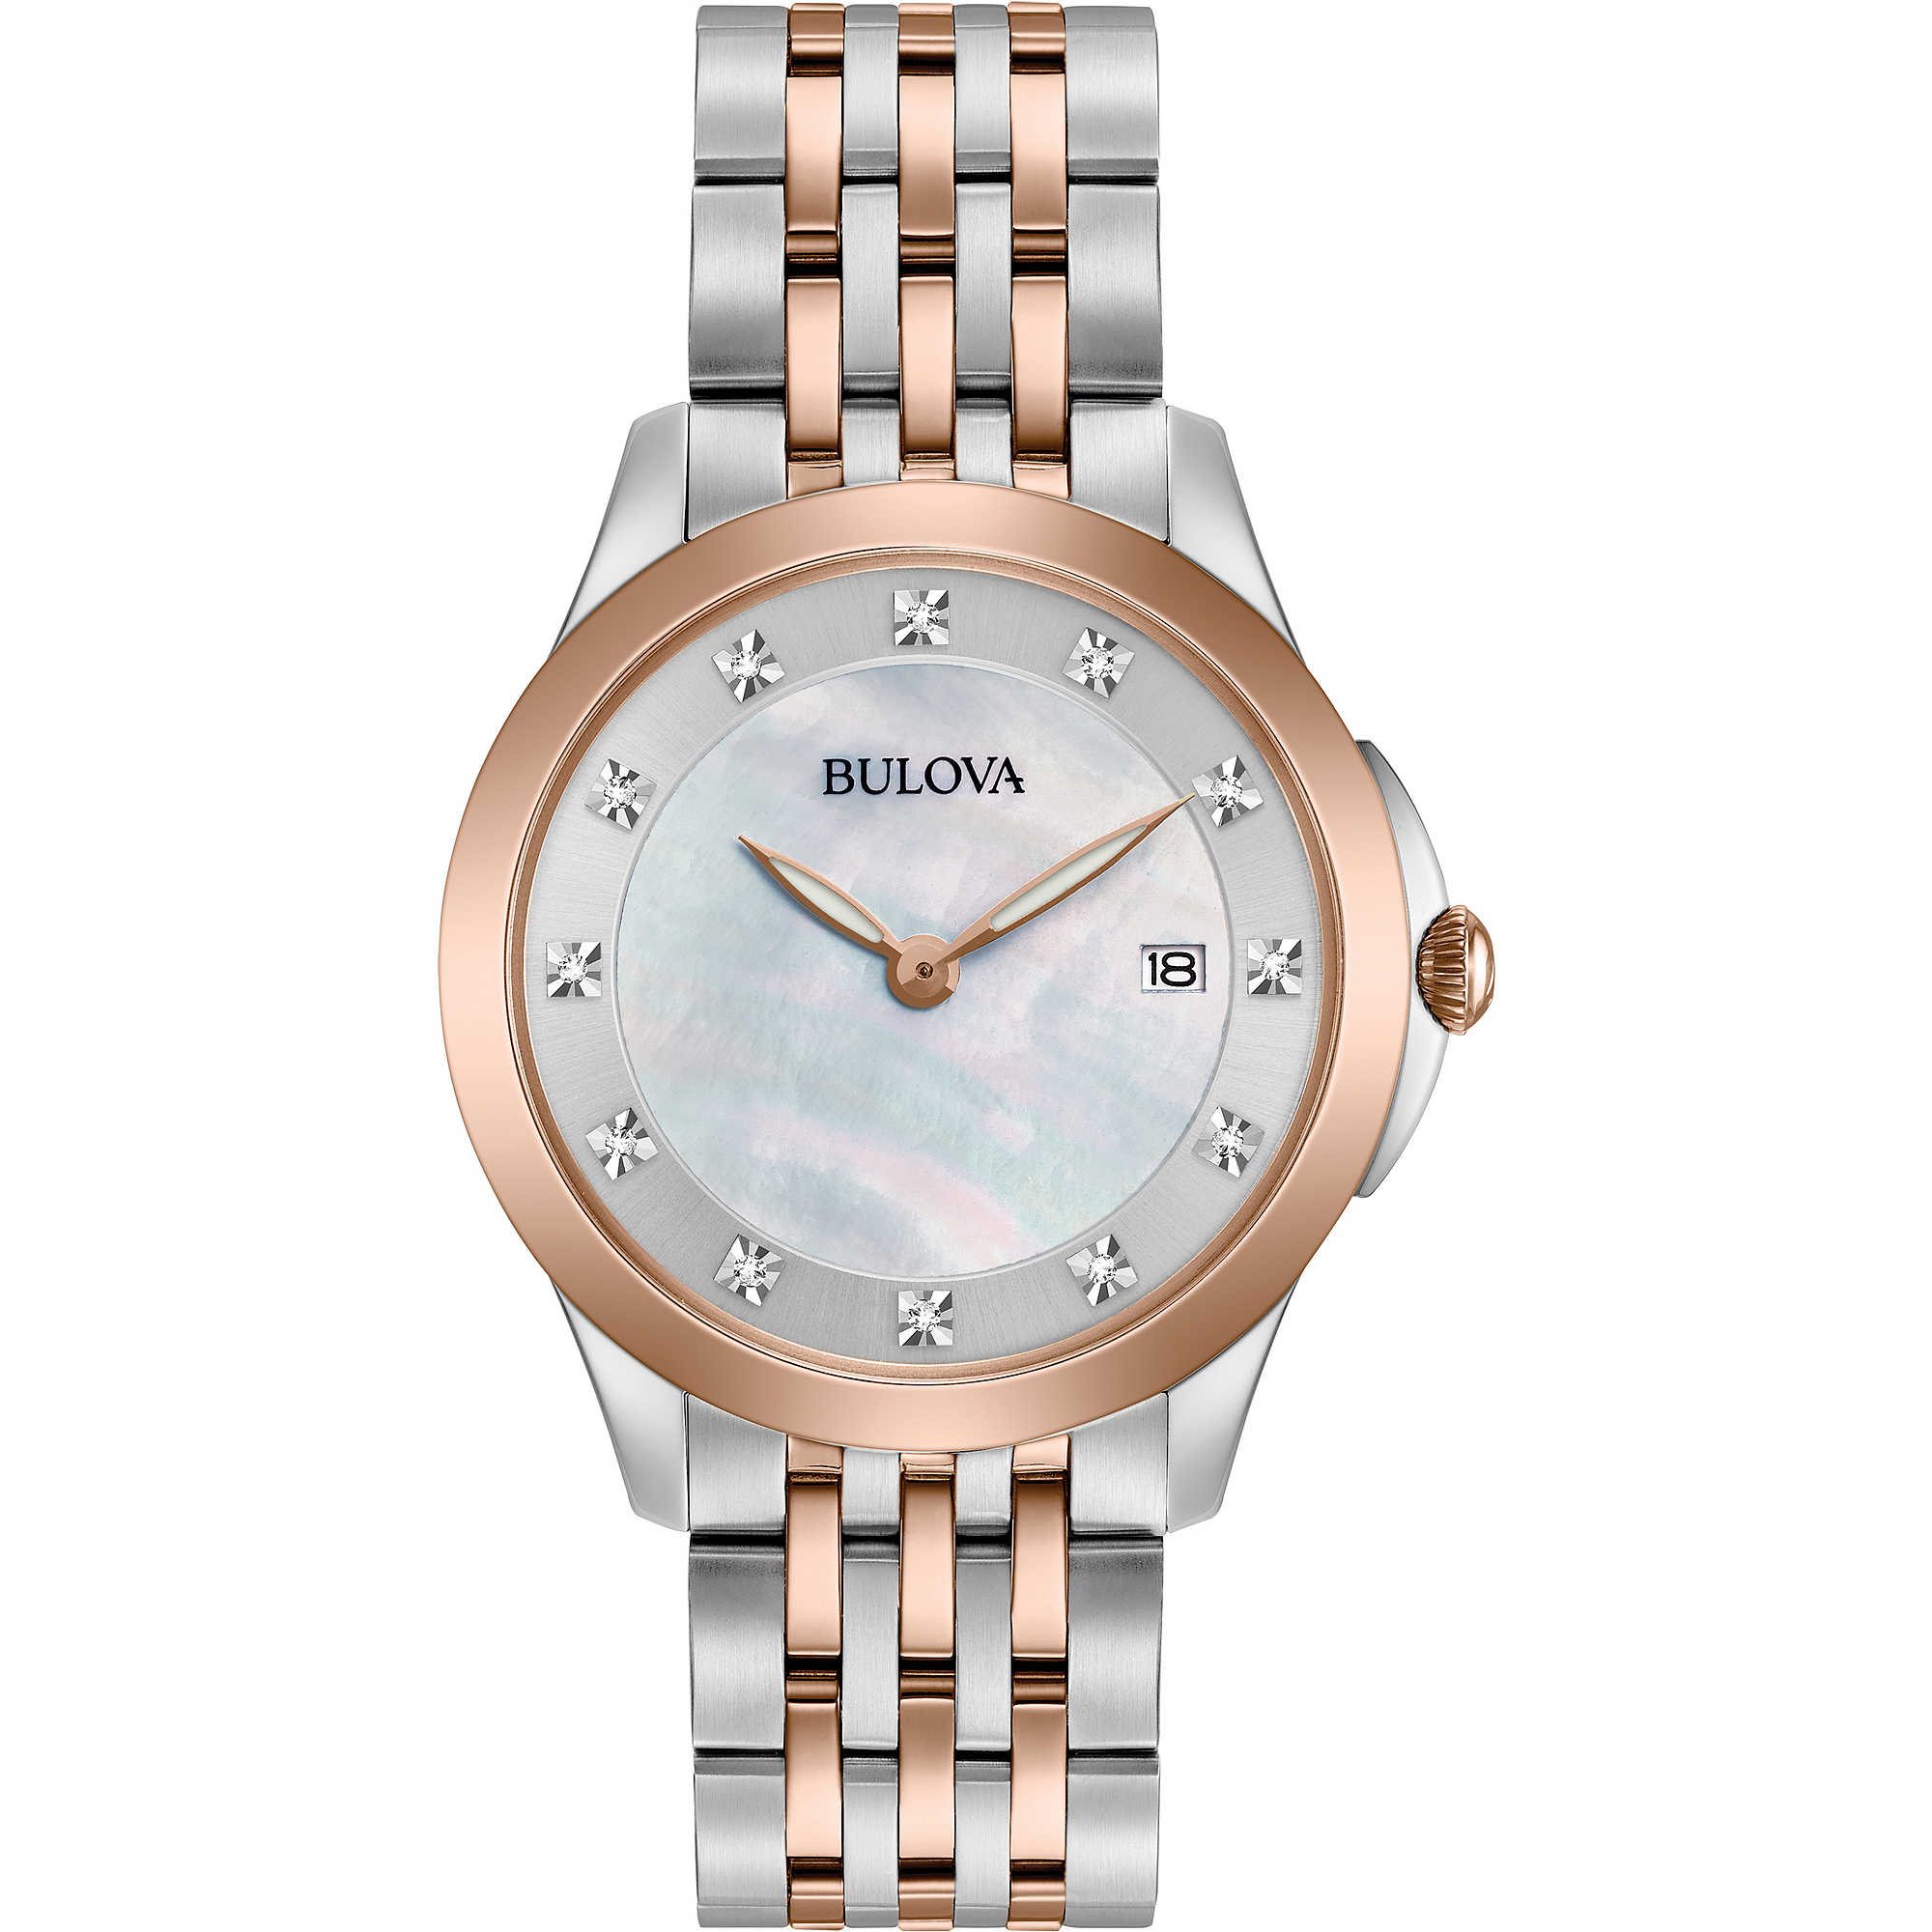 BULOVA Women’s Time-Only Watch Bulova Diamonds